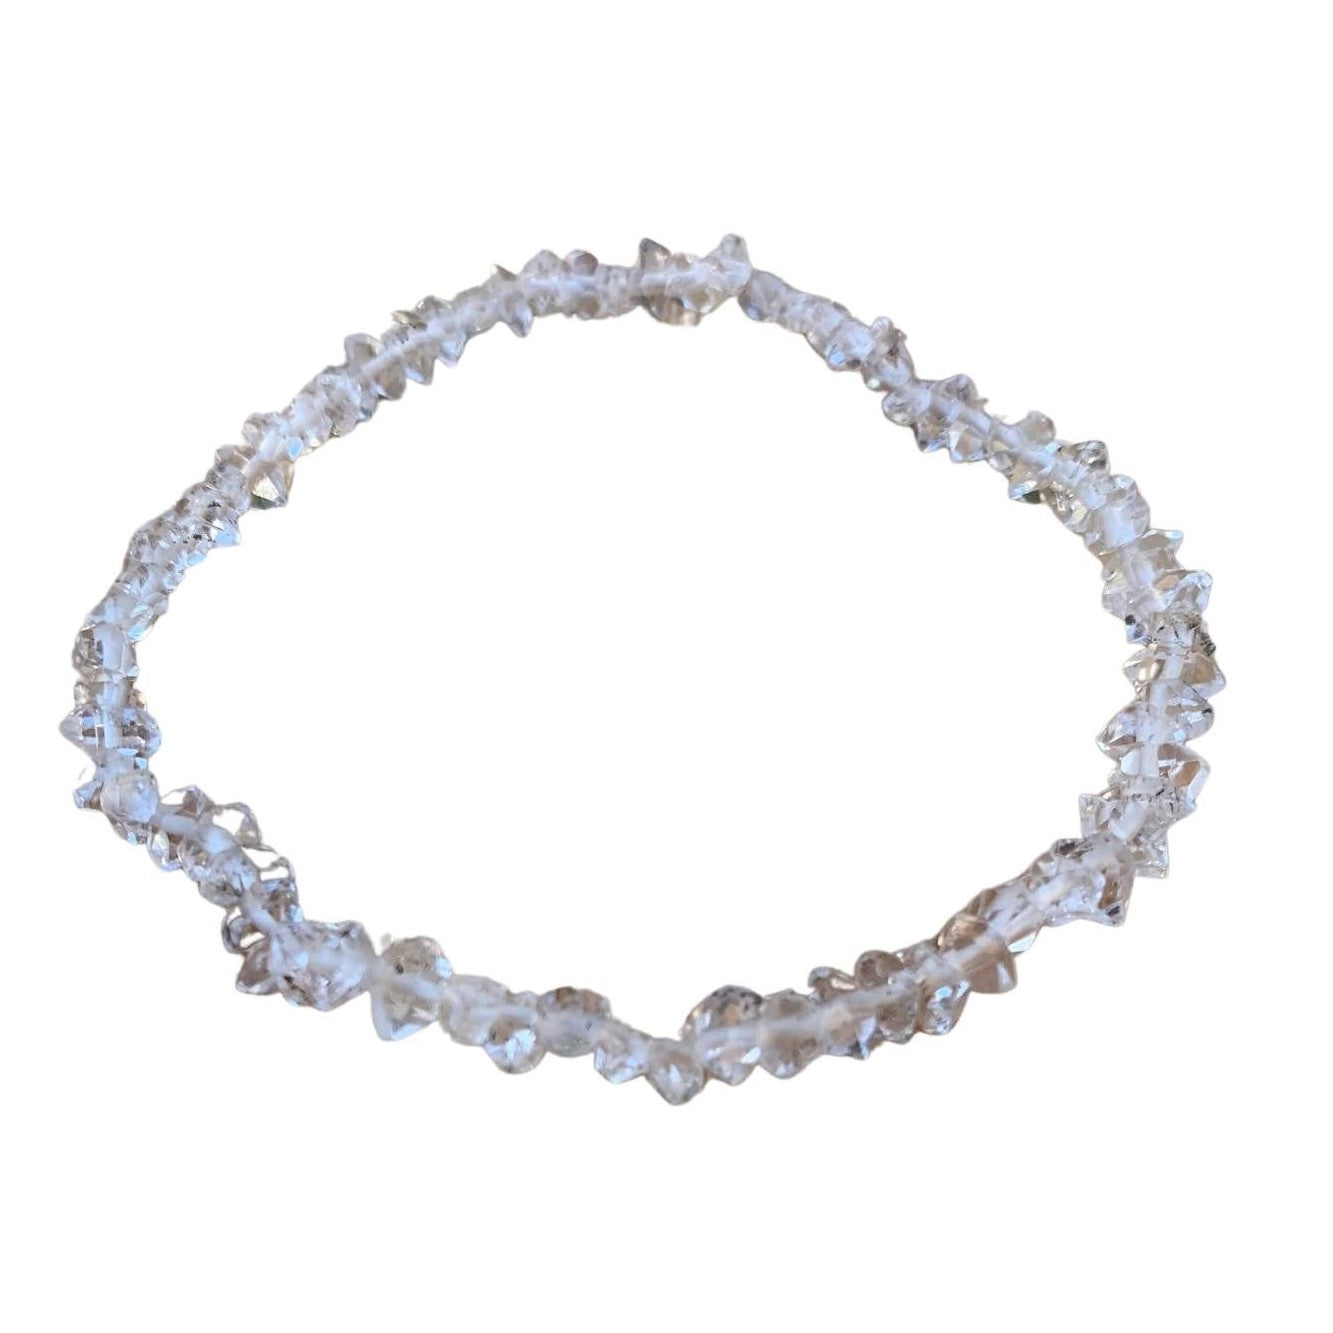 Healing Crystal Bracelets Herkimer Diamond 5 mm Natural Double Points